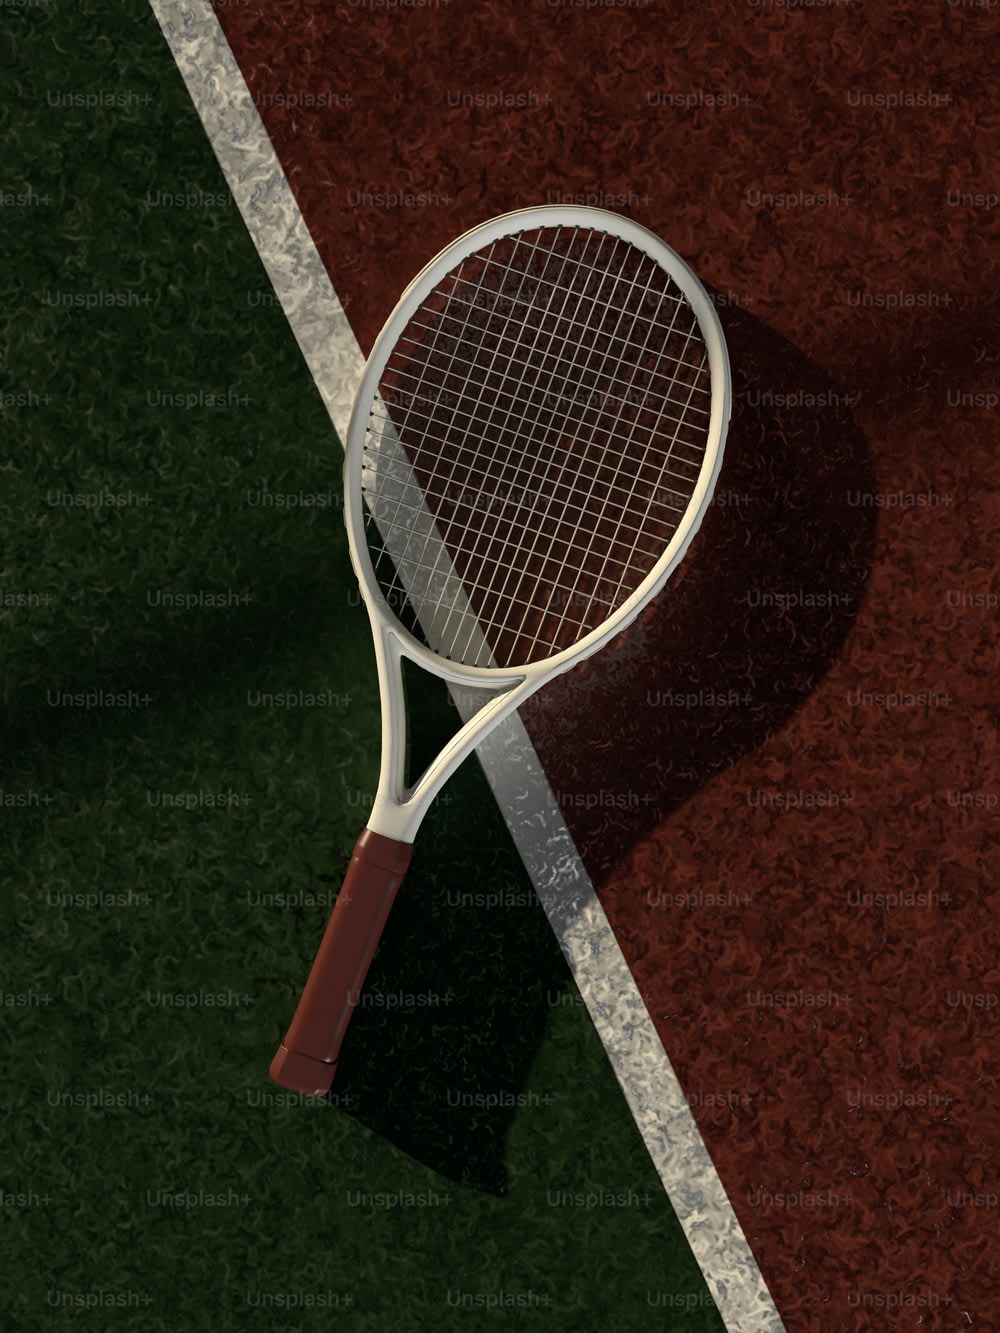 una raqueta de tenis acostada en una cancha de tenis